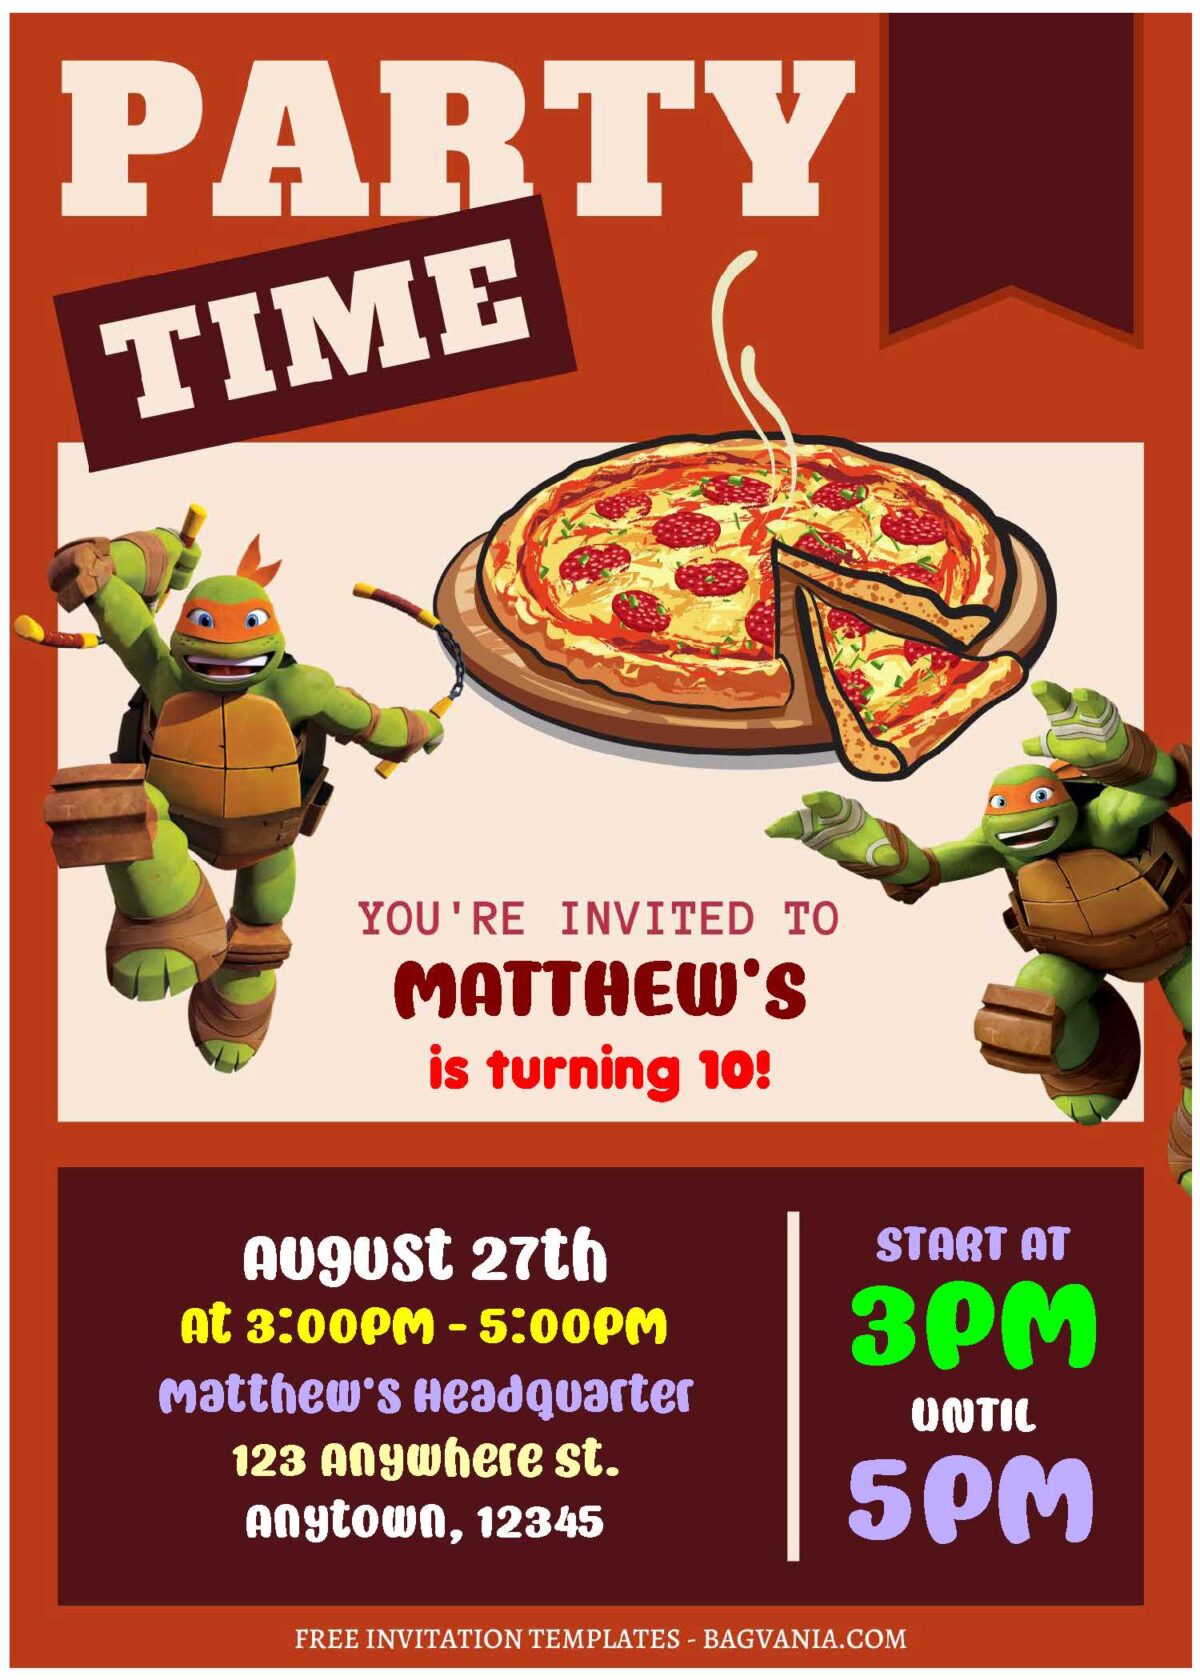 (Free Editable PDF) Fun TMNT Pizza Party Time Birthday Invitation Templates C